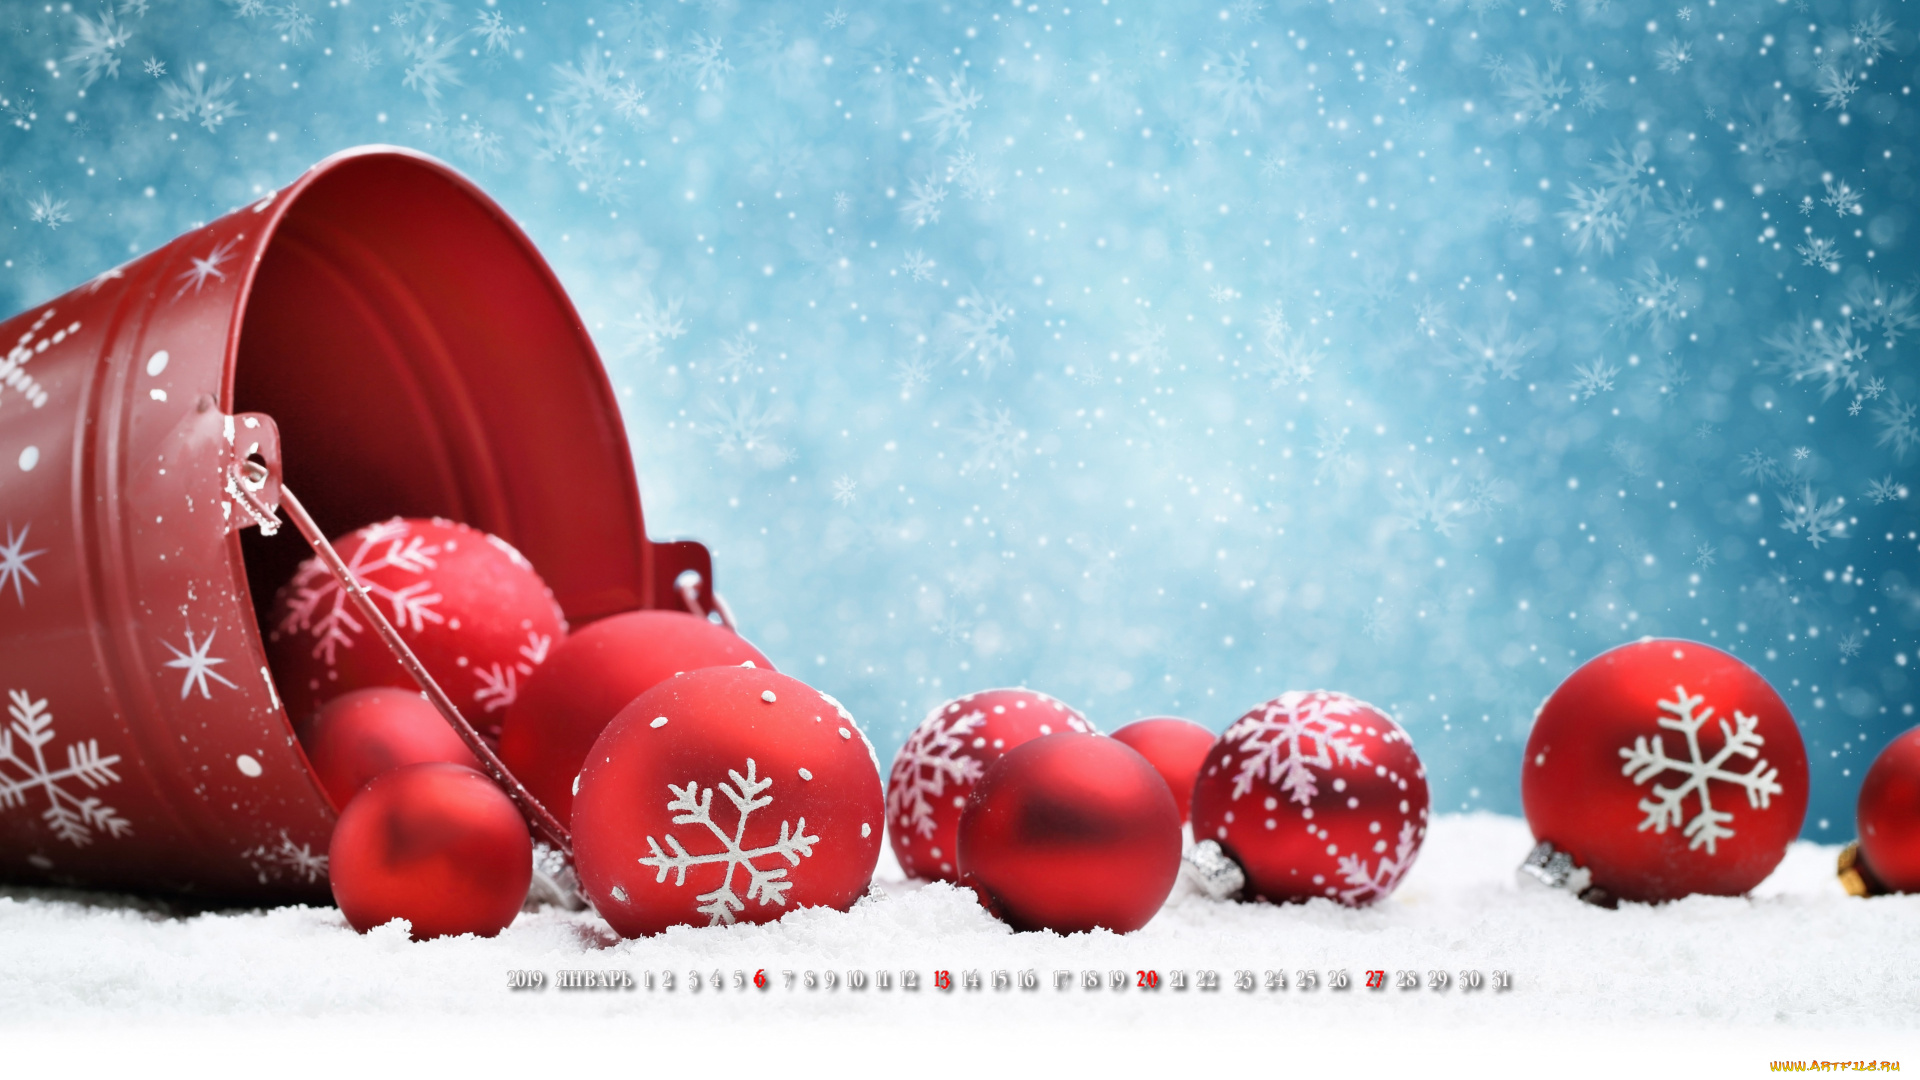 календари, праздники, , салюты, ведро, игрушка, шар, снежинка